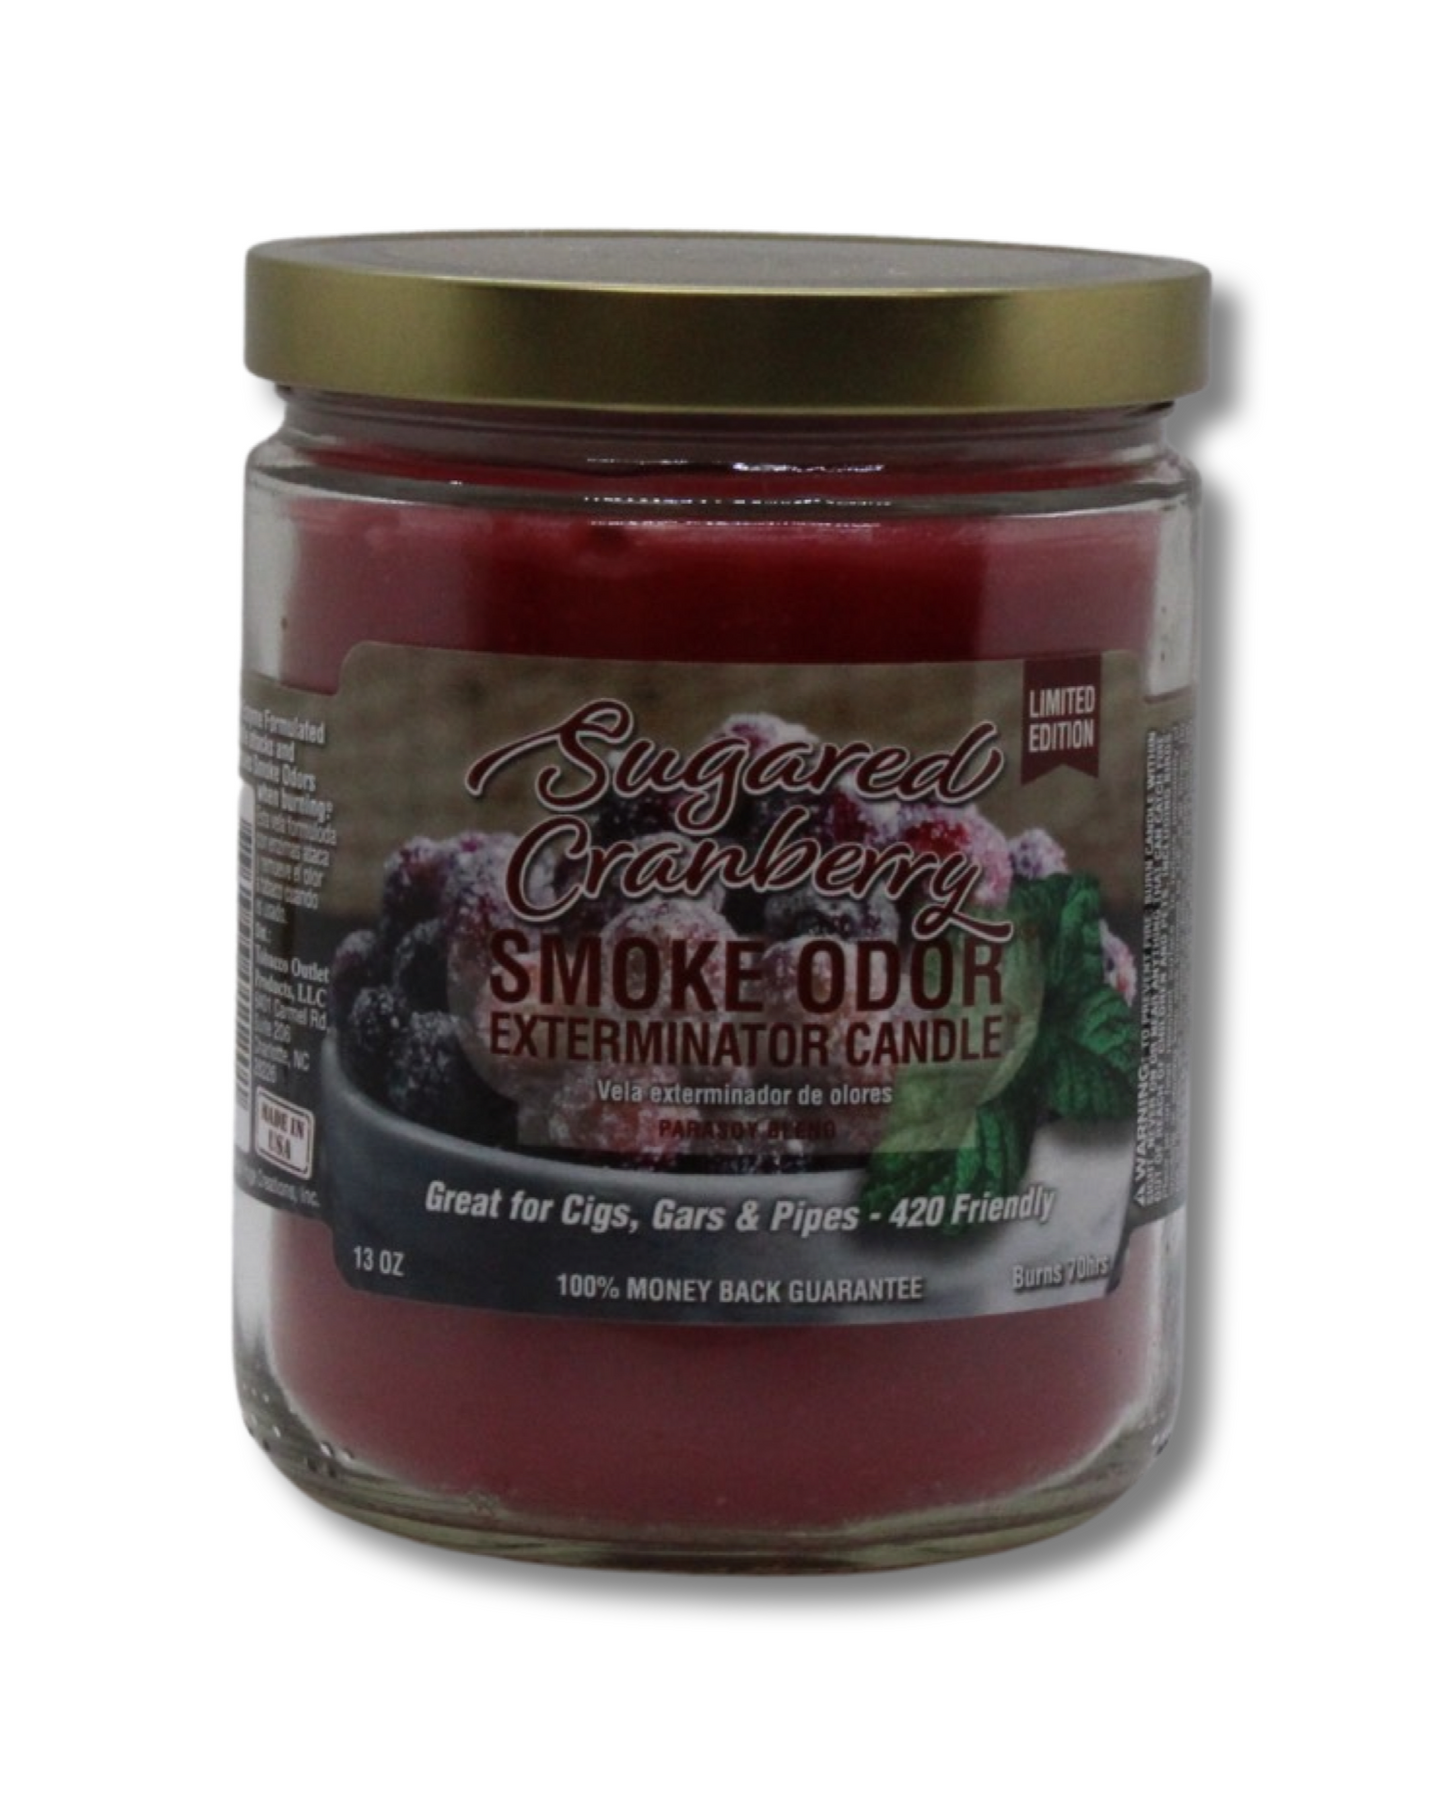 Smoke Odor Exterminator Candle - Sugared Cranberry